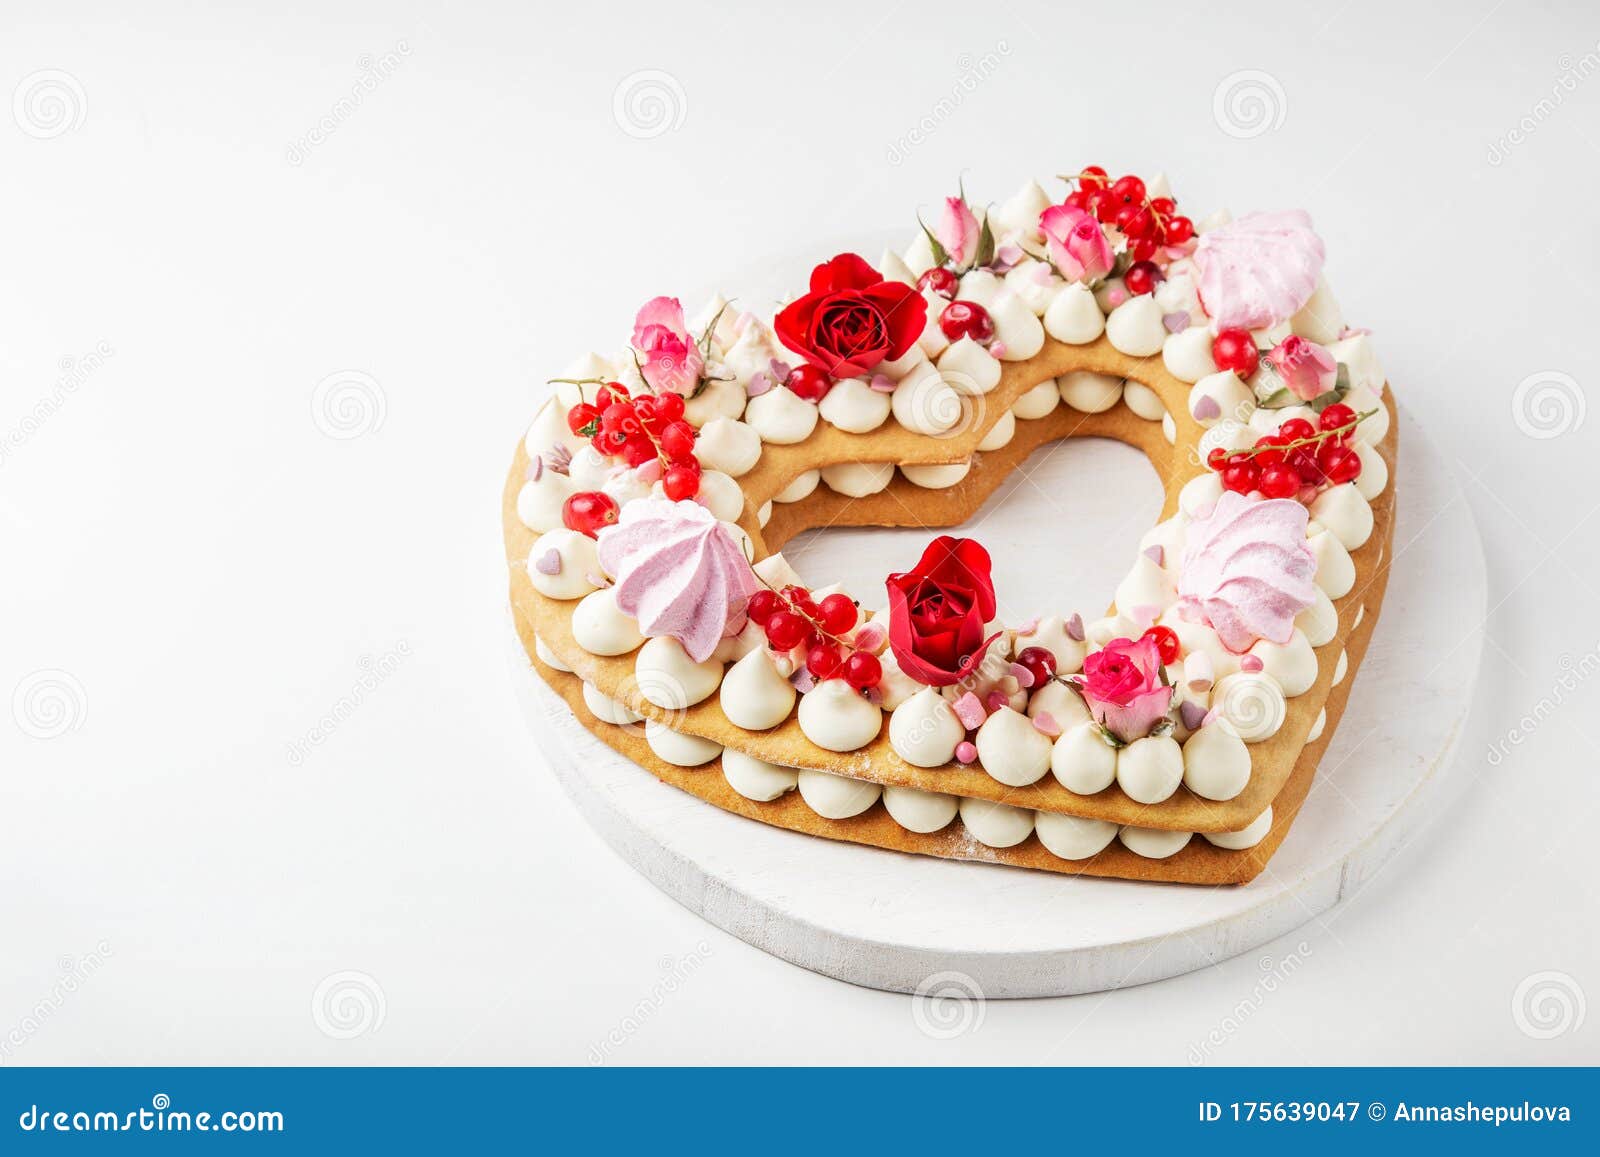 Homemade Trendy Heart Shaped Naked Cake for Valentines Day, White ...